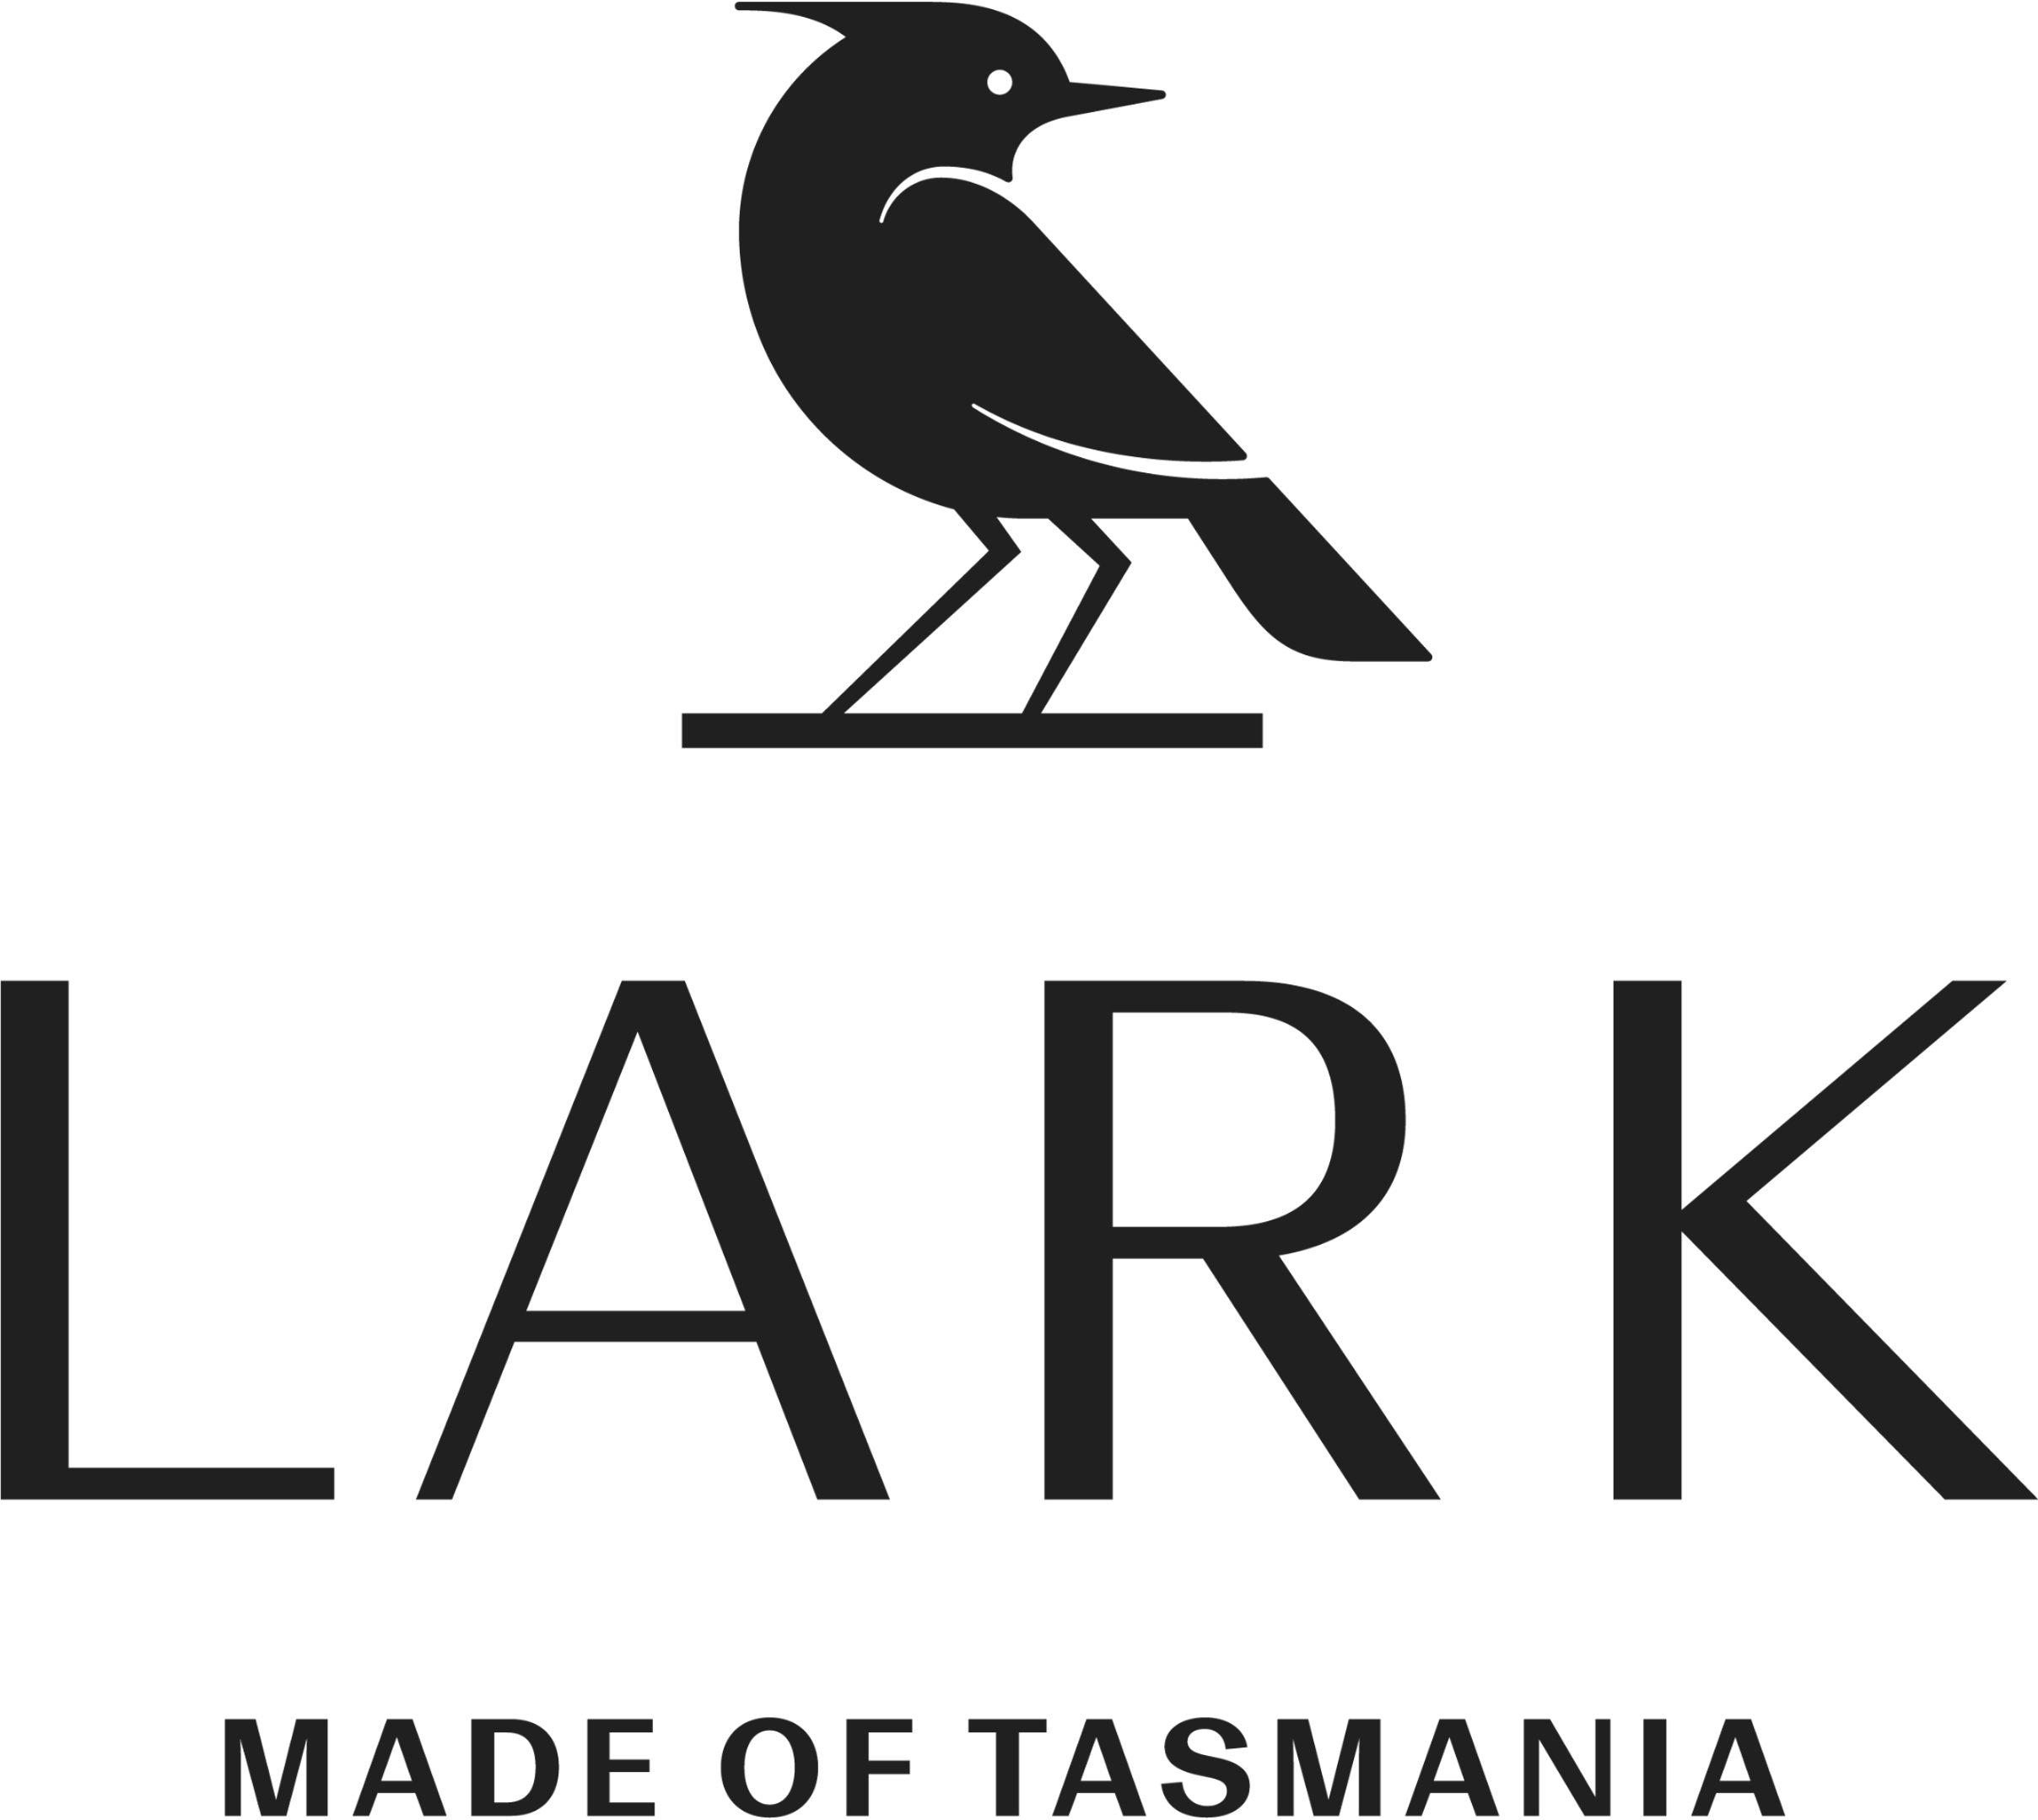 Lark Distilling Co. Limited Logo